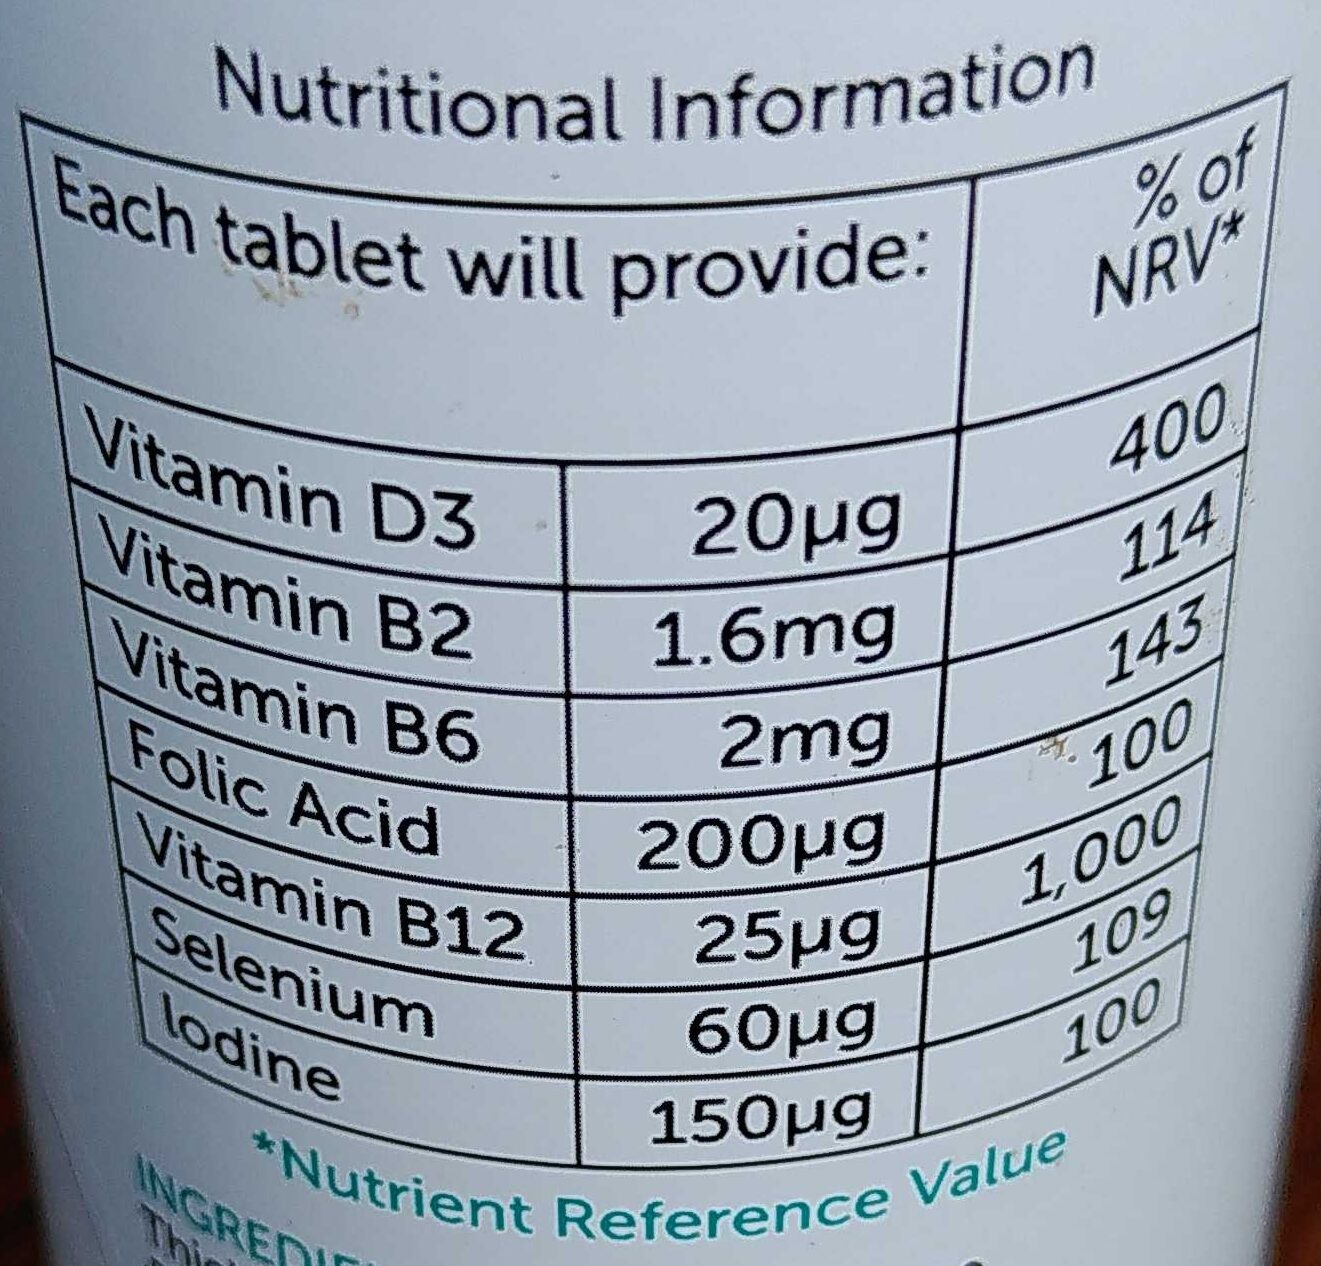 Veg1 - Nutrition facts